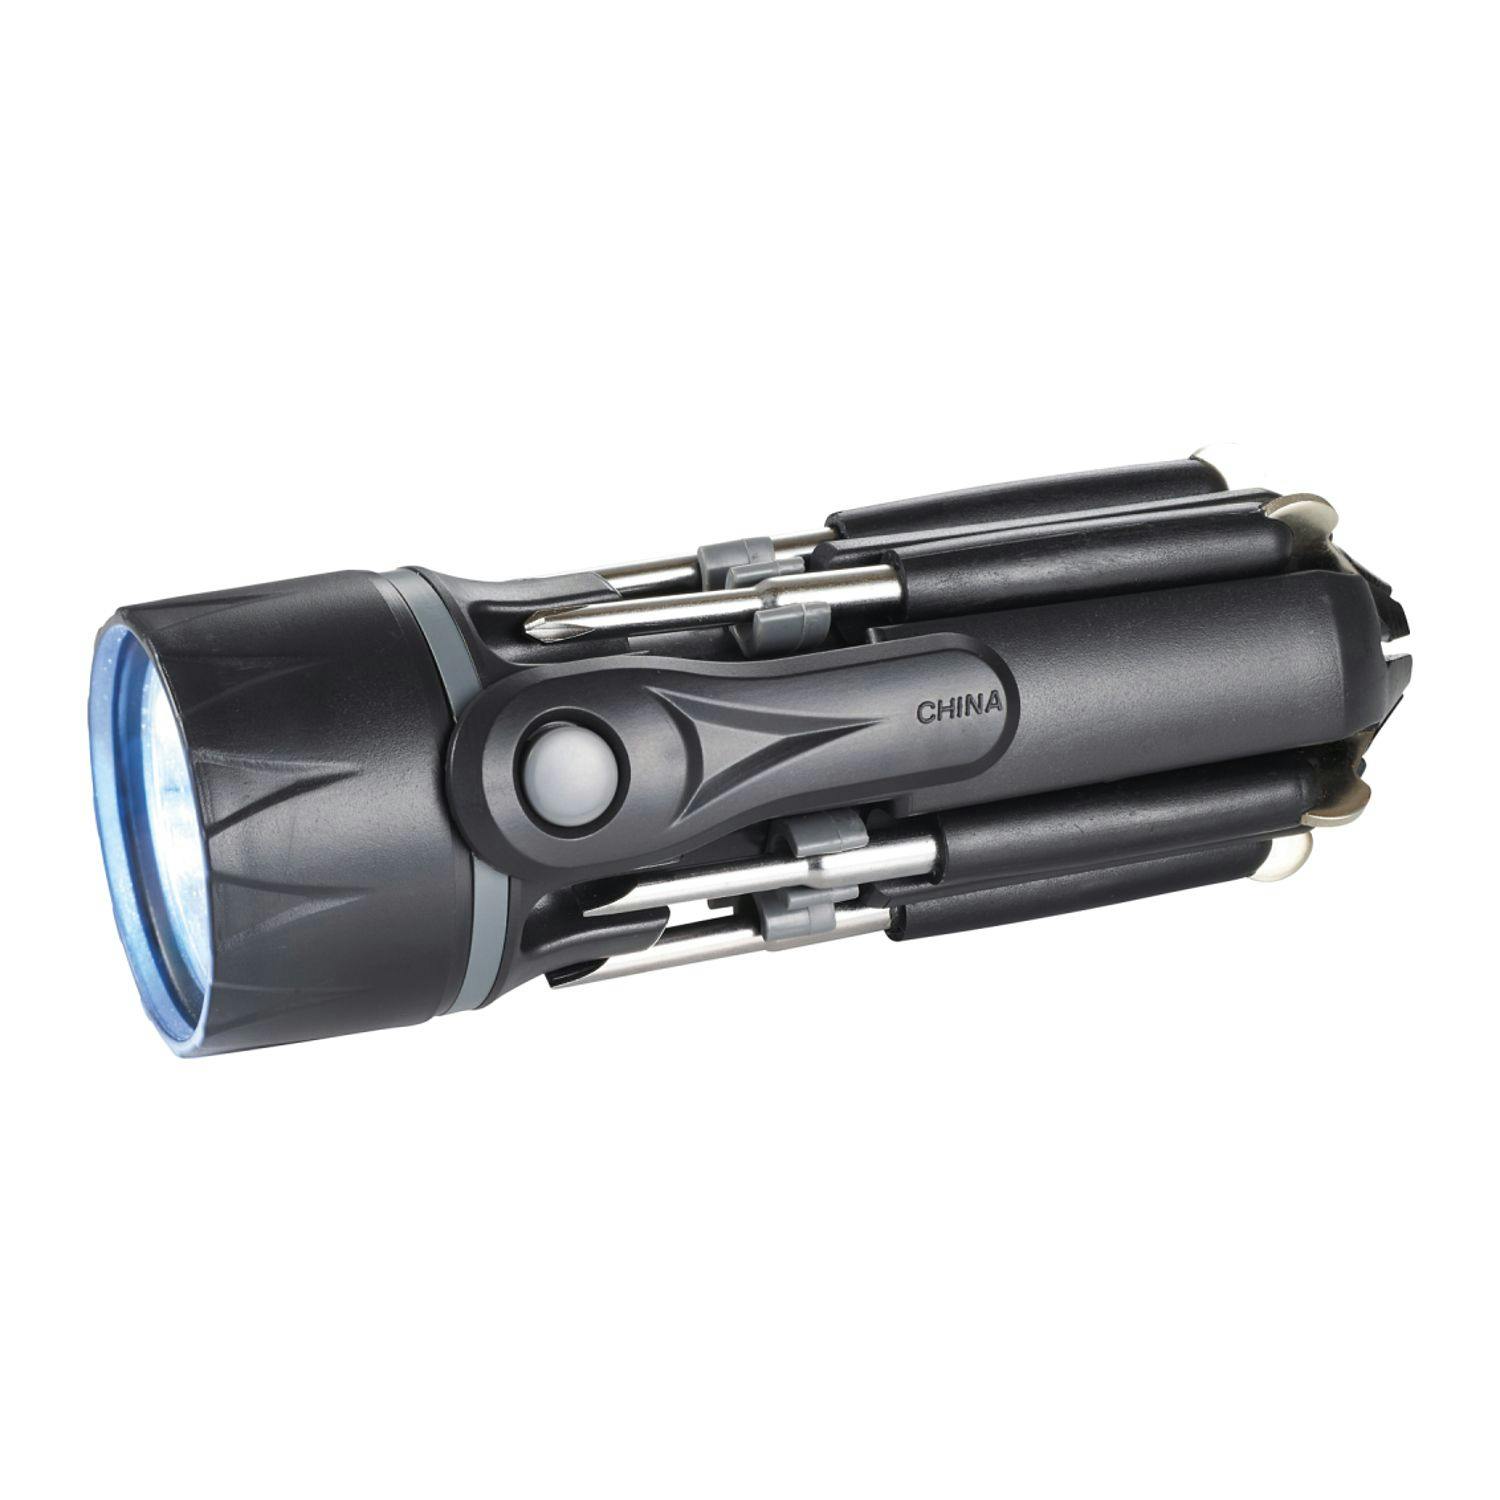 Spidey 8-In-1 Screwdriver Flashlight - additional Image 2